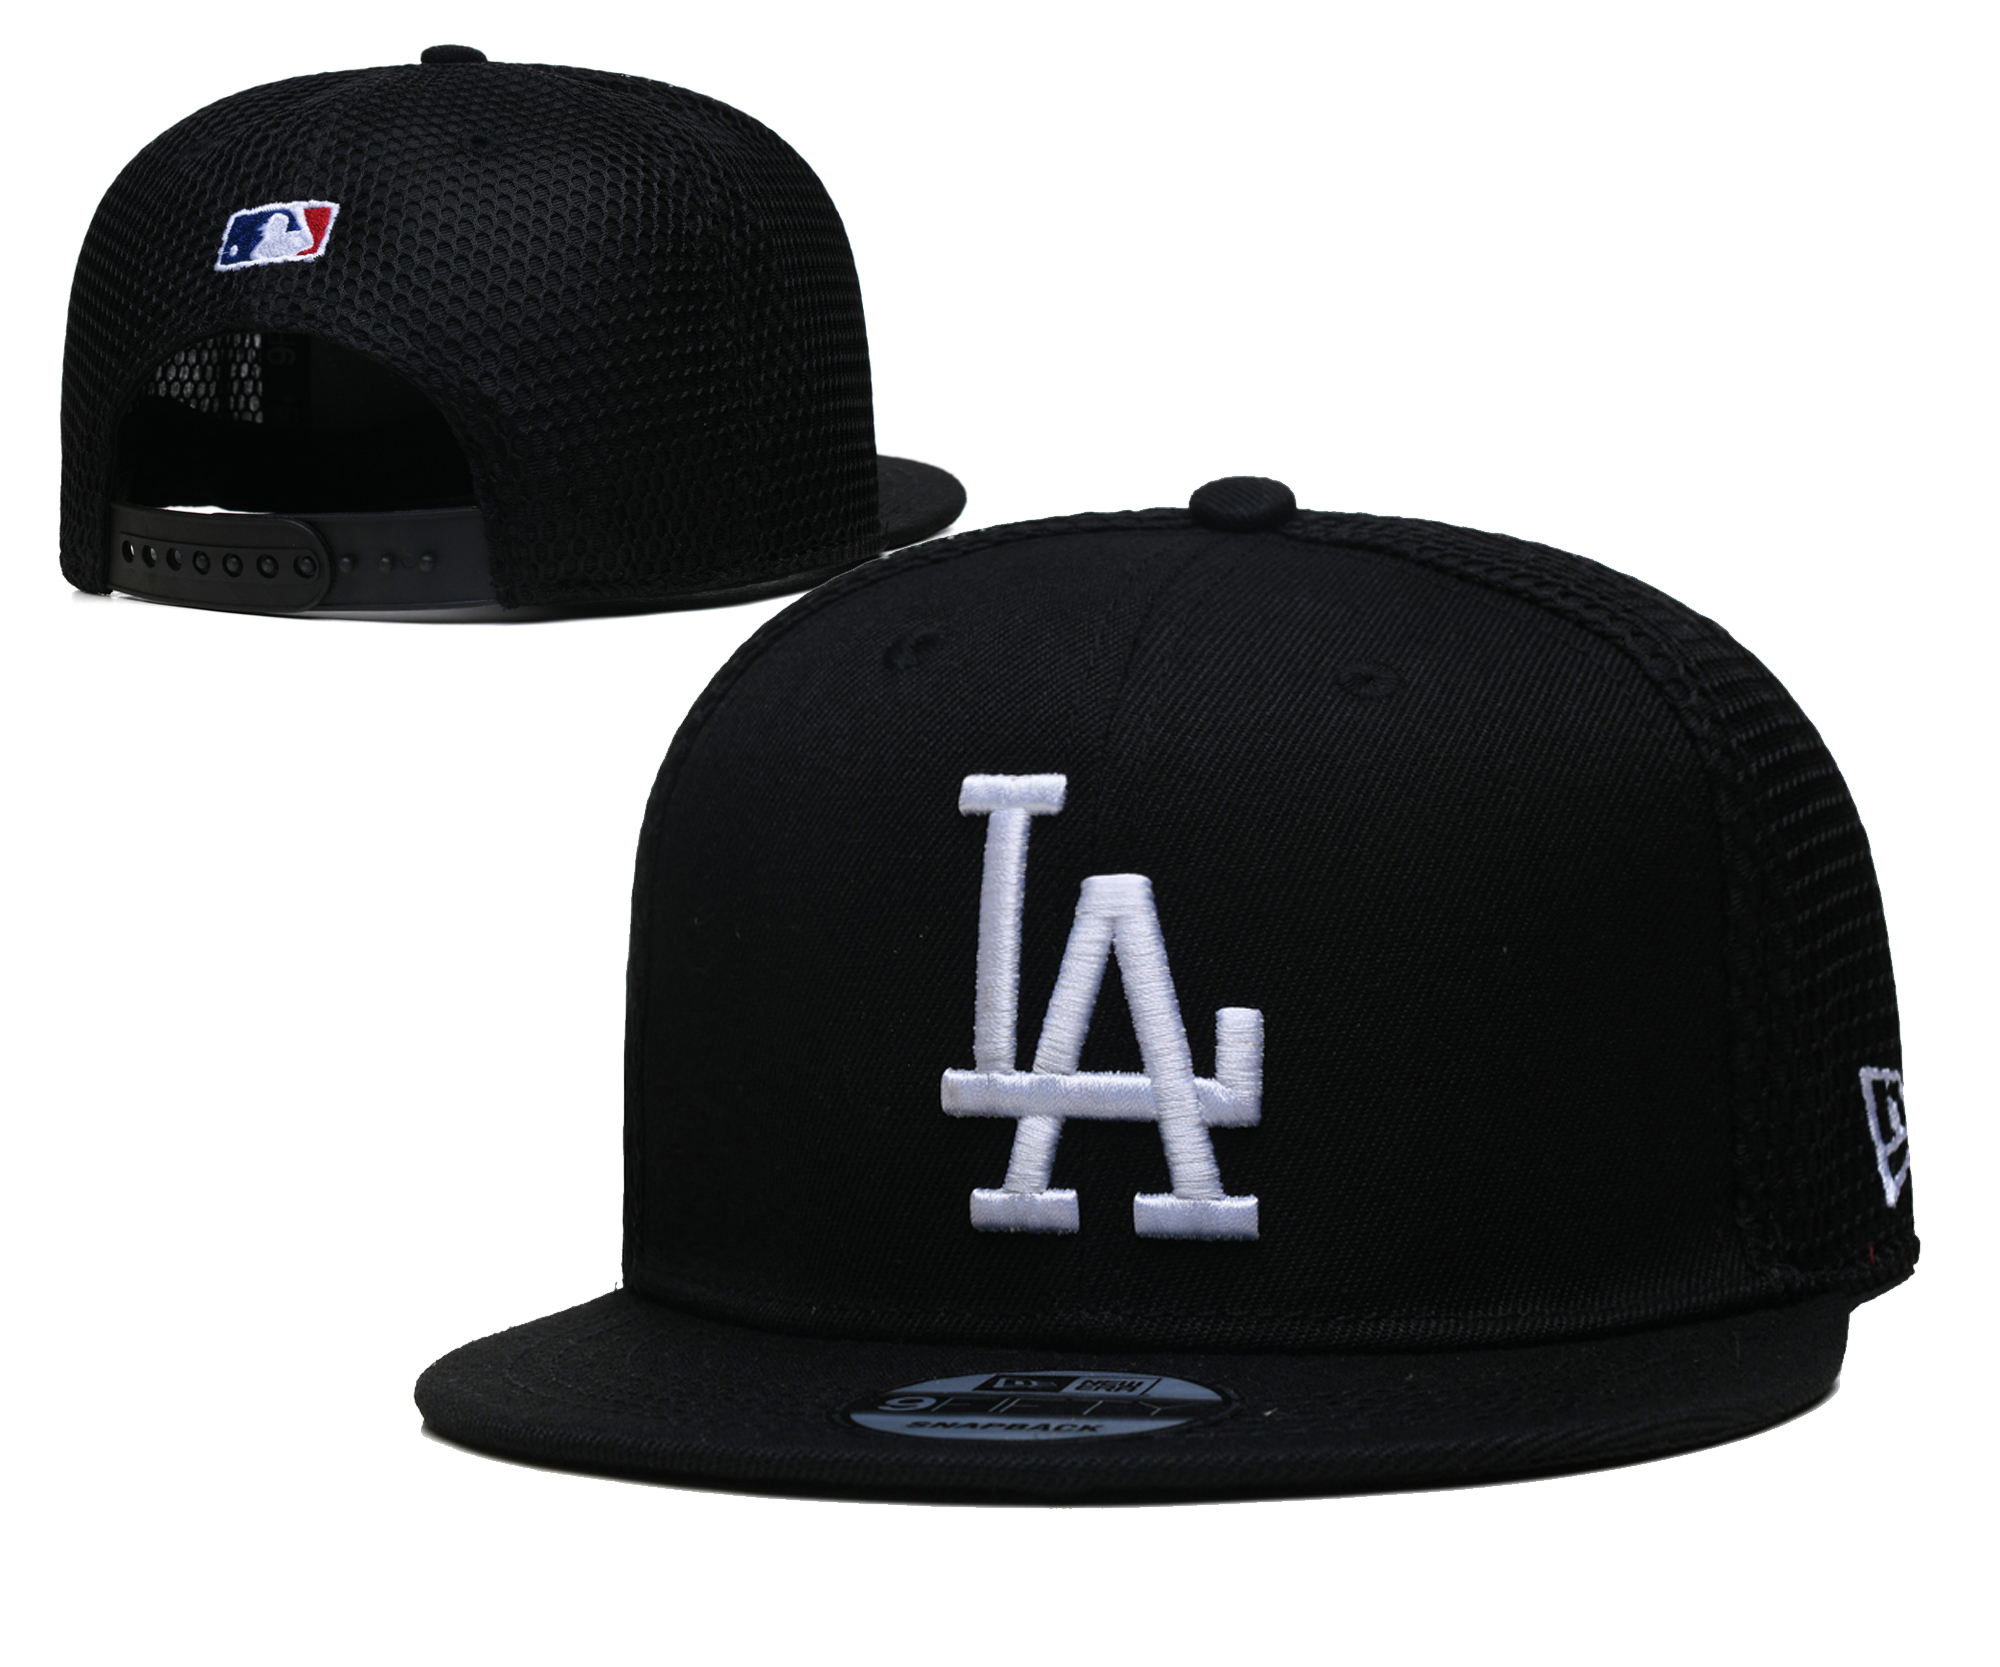 2021 MLB Los Angeles Dodgers #29 TX hat